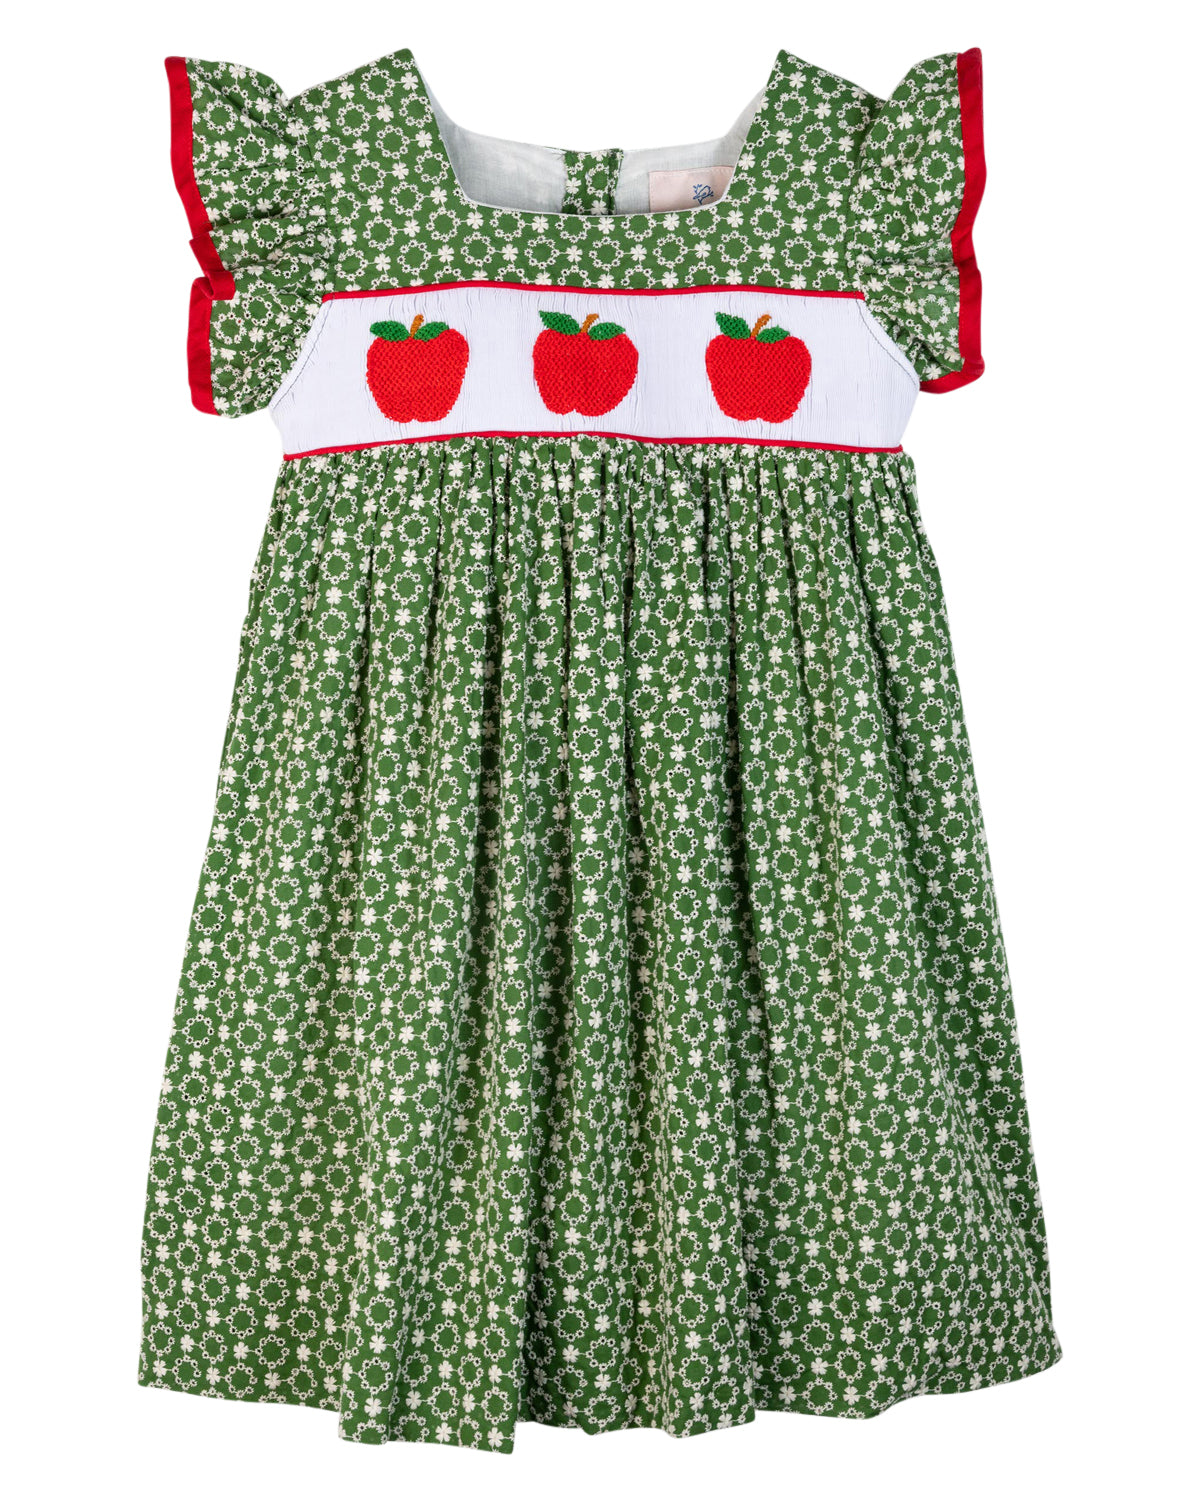 Apples Smocked Green Eyelet Dress